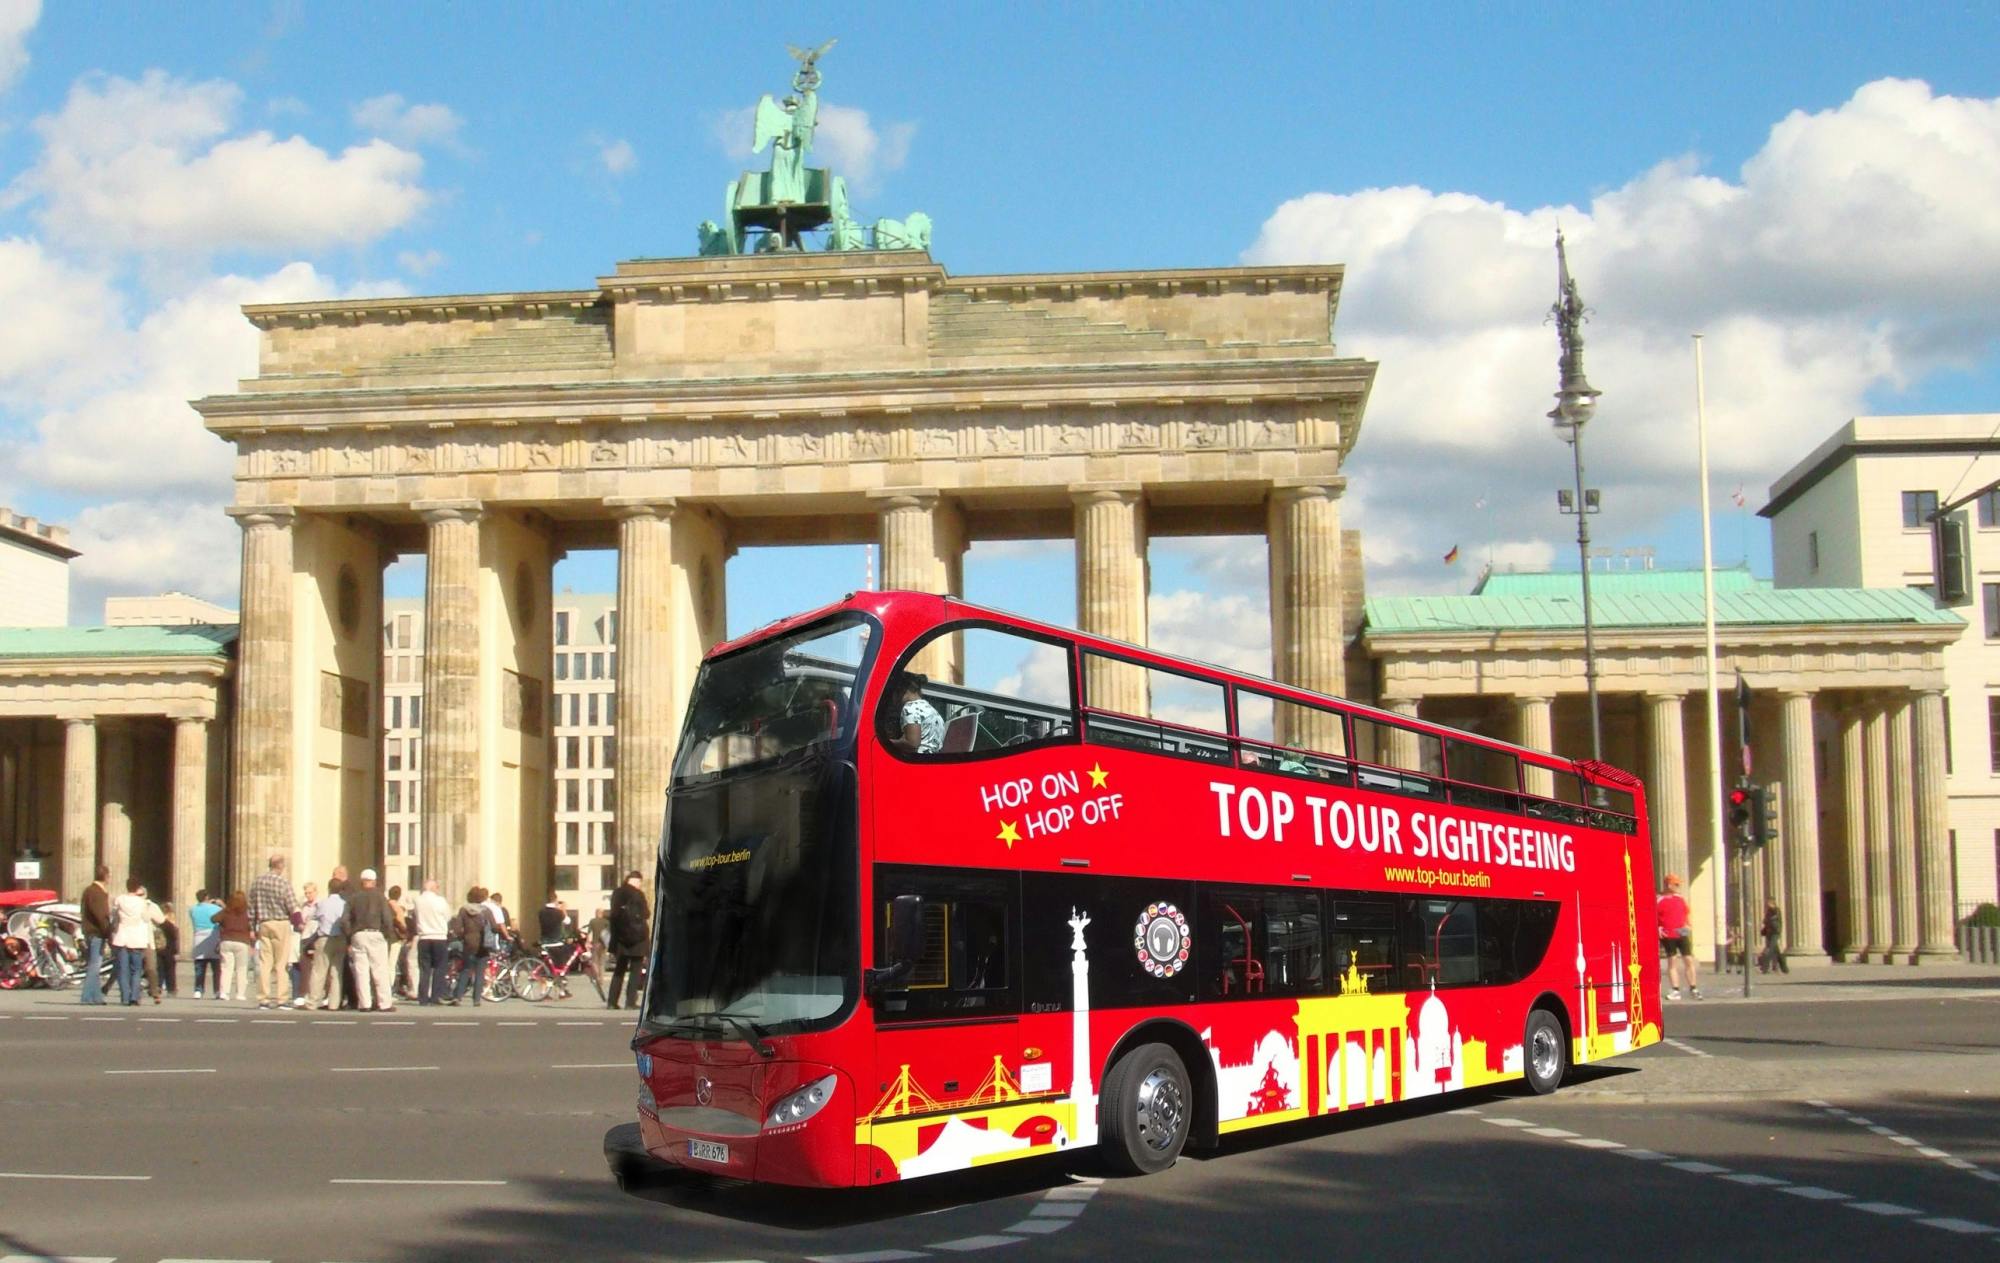 Berlin 24-timmars-hop-on-hop-off-sightseeingtur